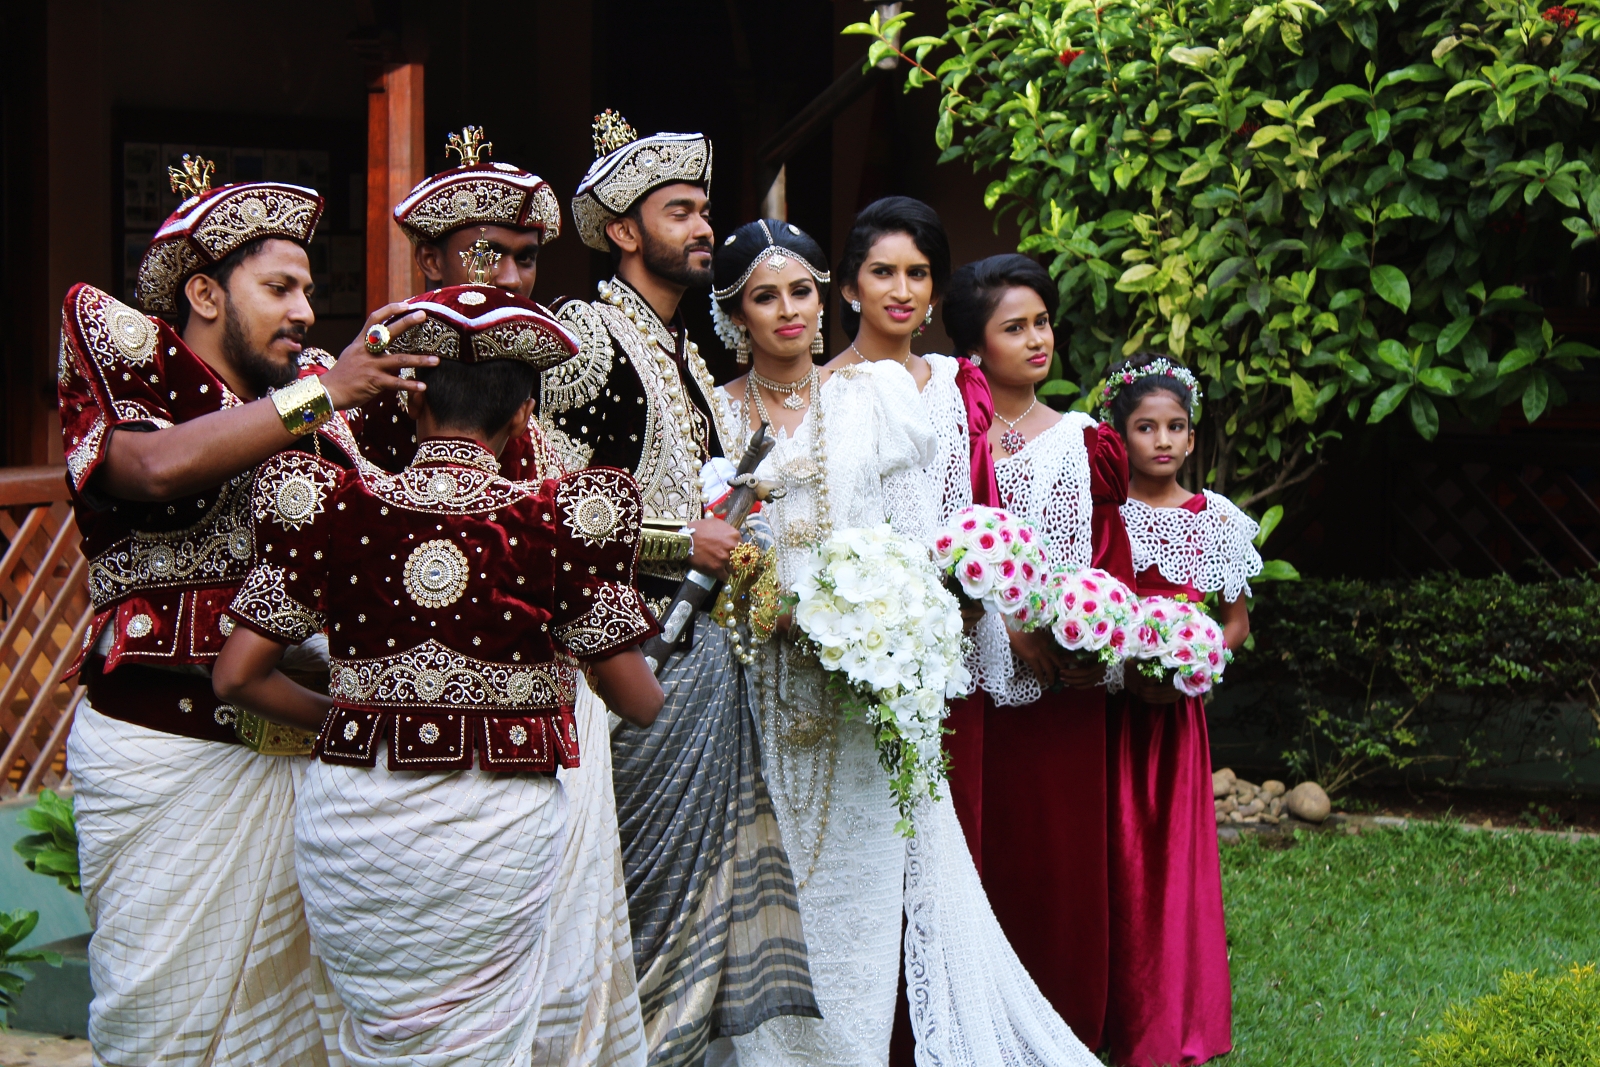 Poruwa Sinhalese Wedding: Kandyan Attire and Rituals